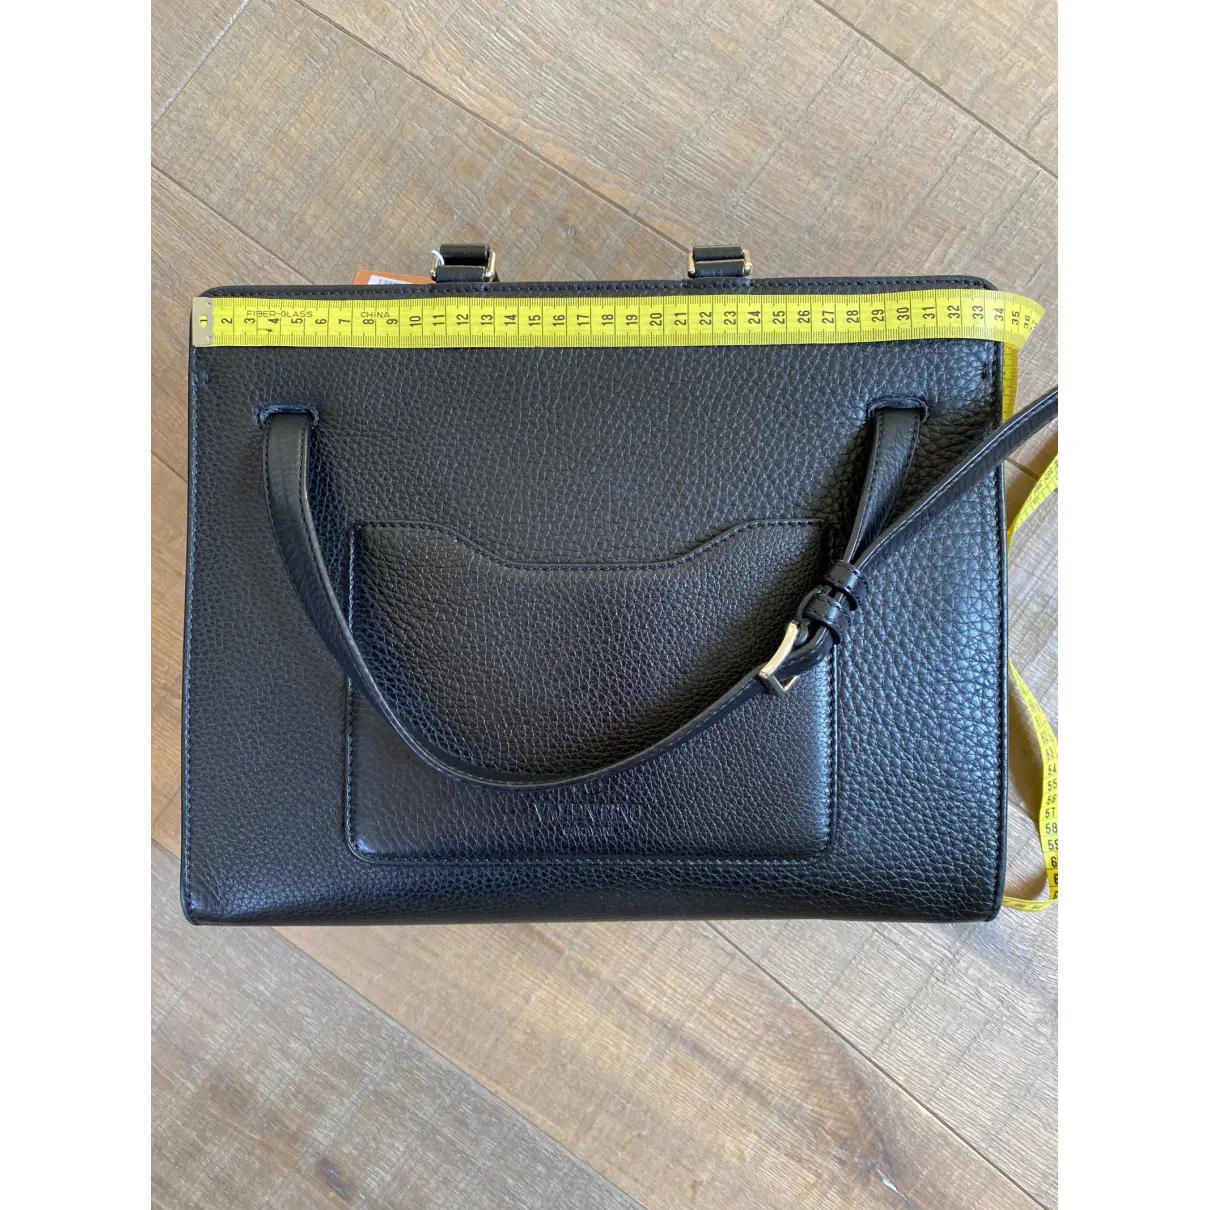 Buy Valentino Garavani JoyLock leather handbag online